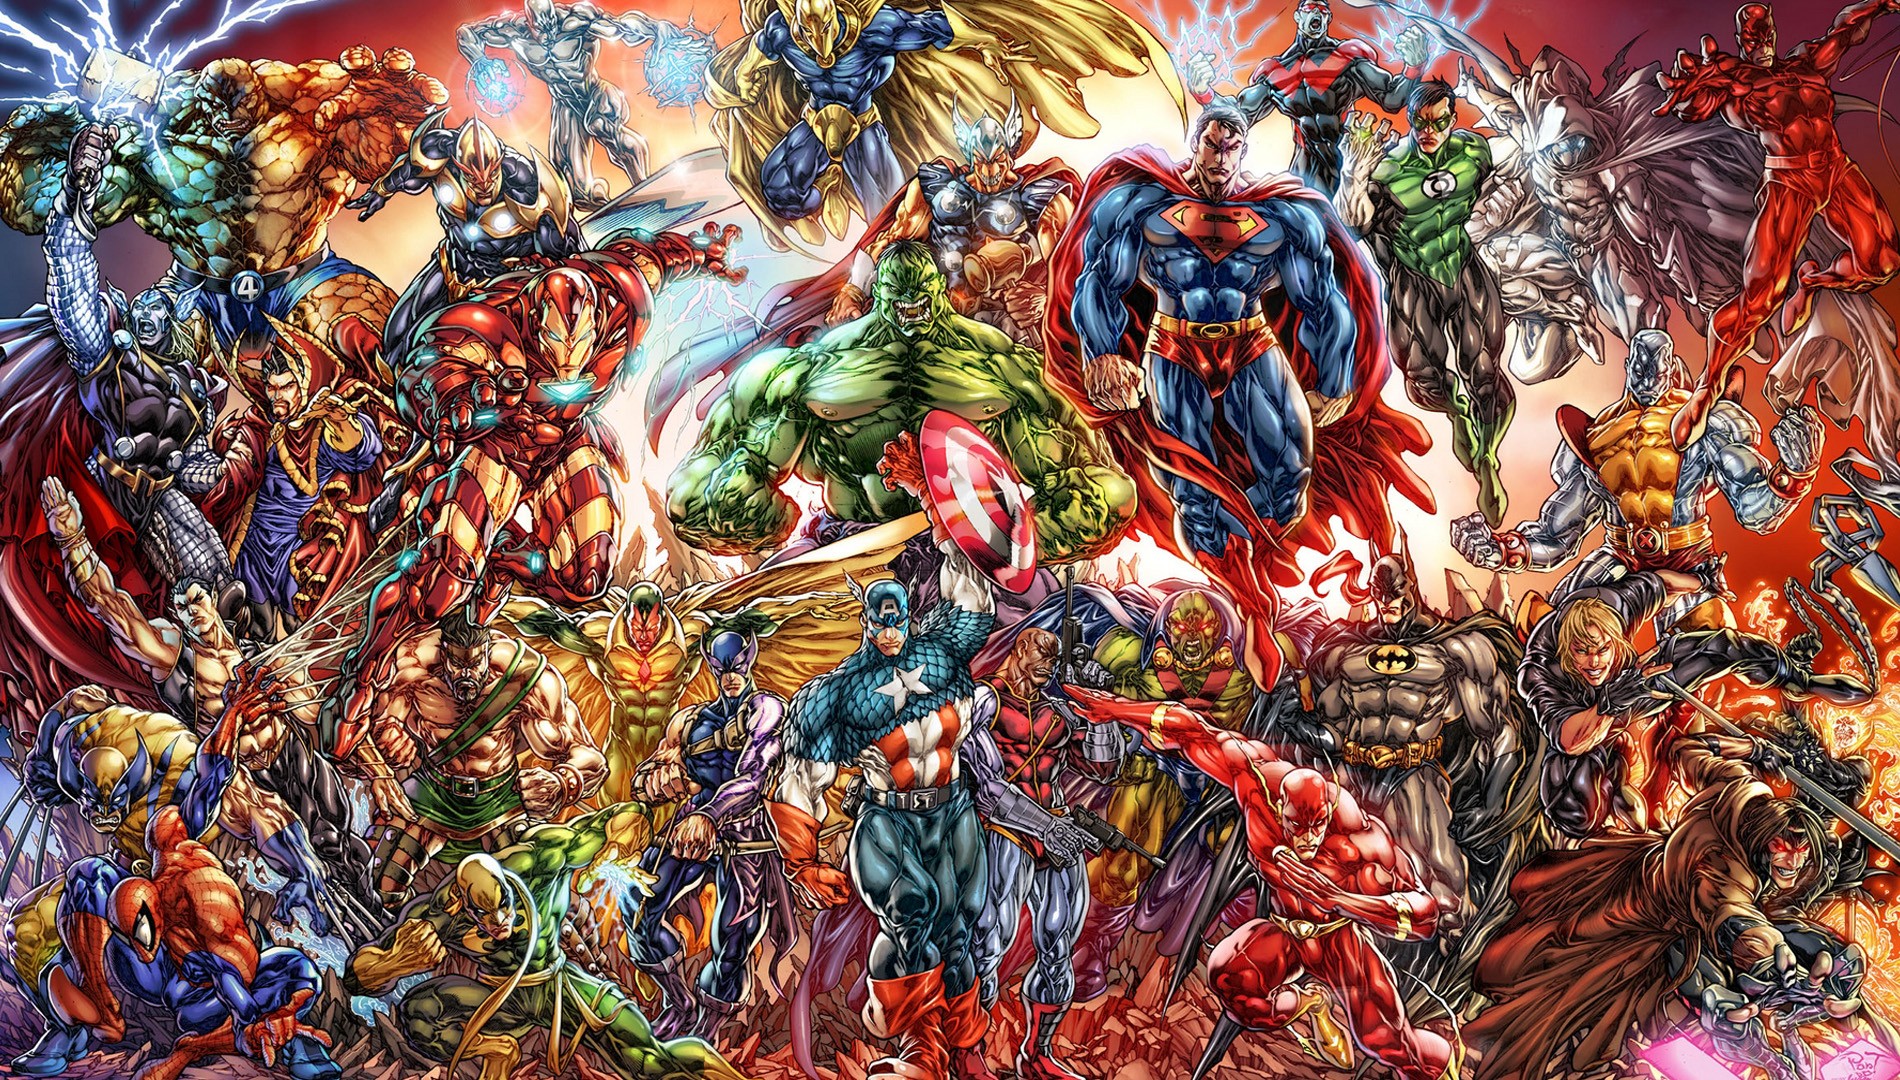 Wallpaper, 1900x1080 px, Batman, Captain America, Green Lantern, Hulk, Spider Man, Superman, The Avengers, The Flash, Thor, Wolverine 1900x1080